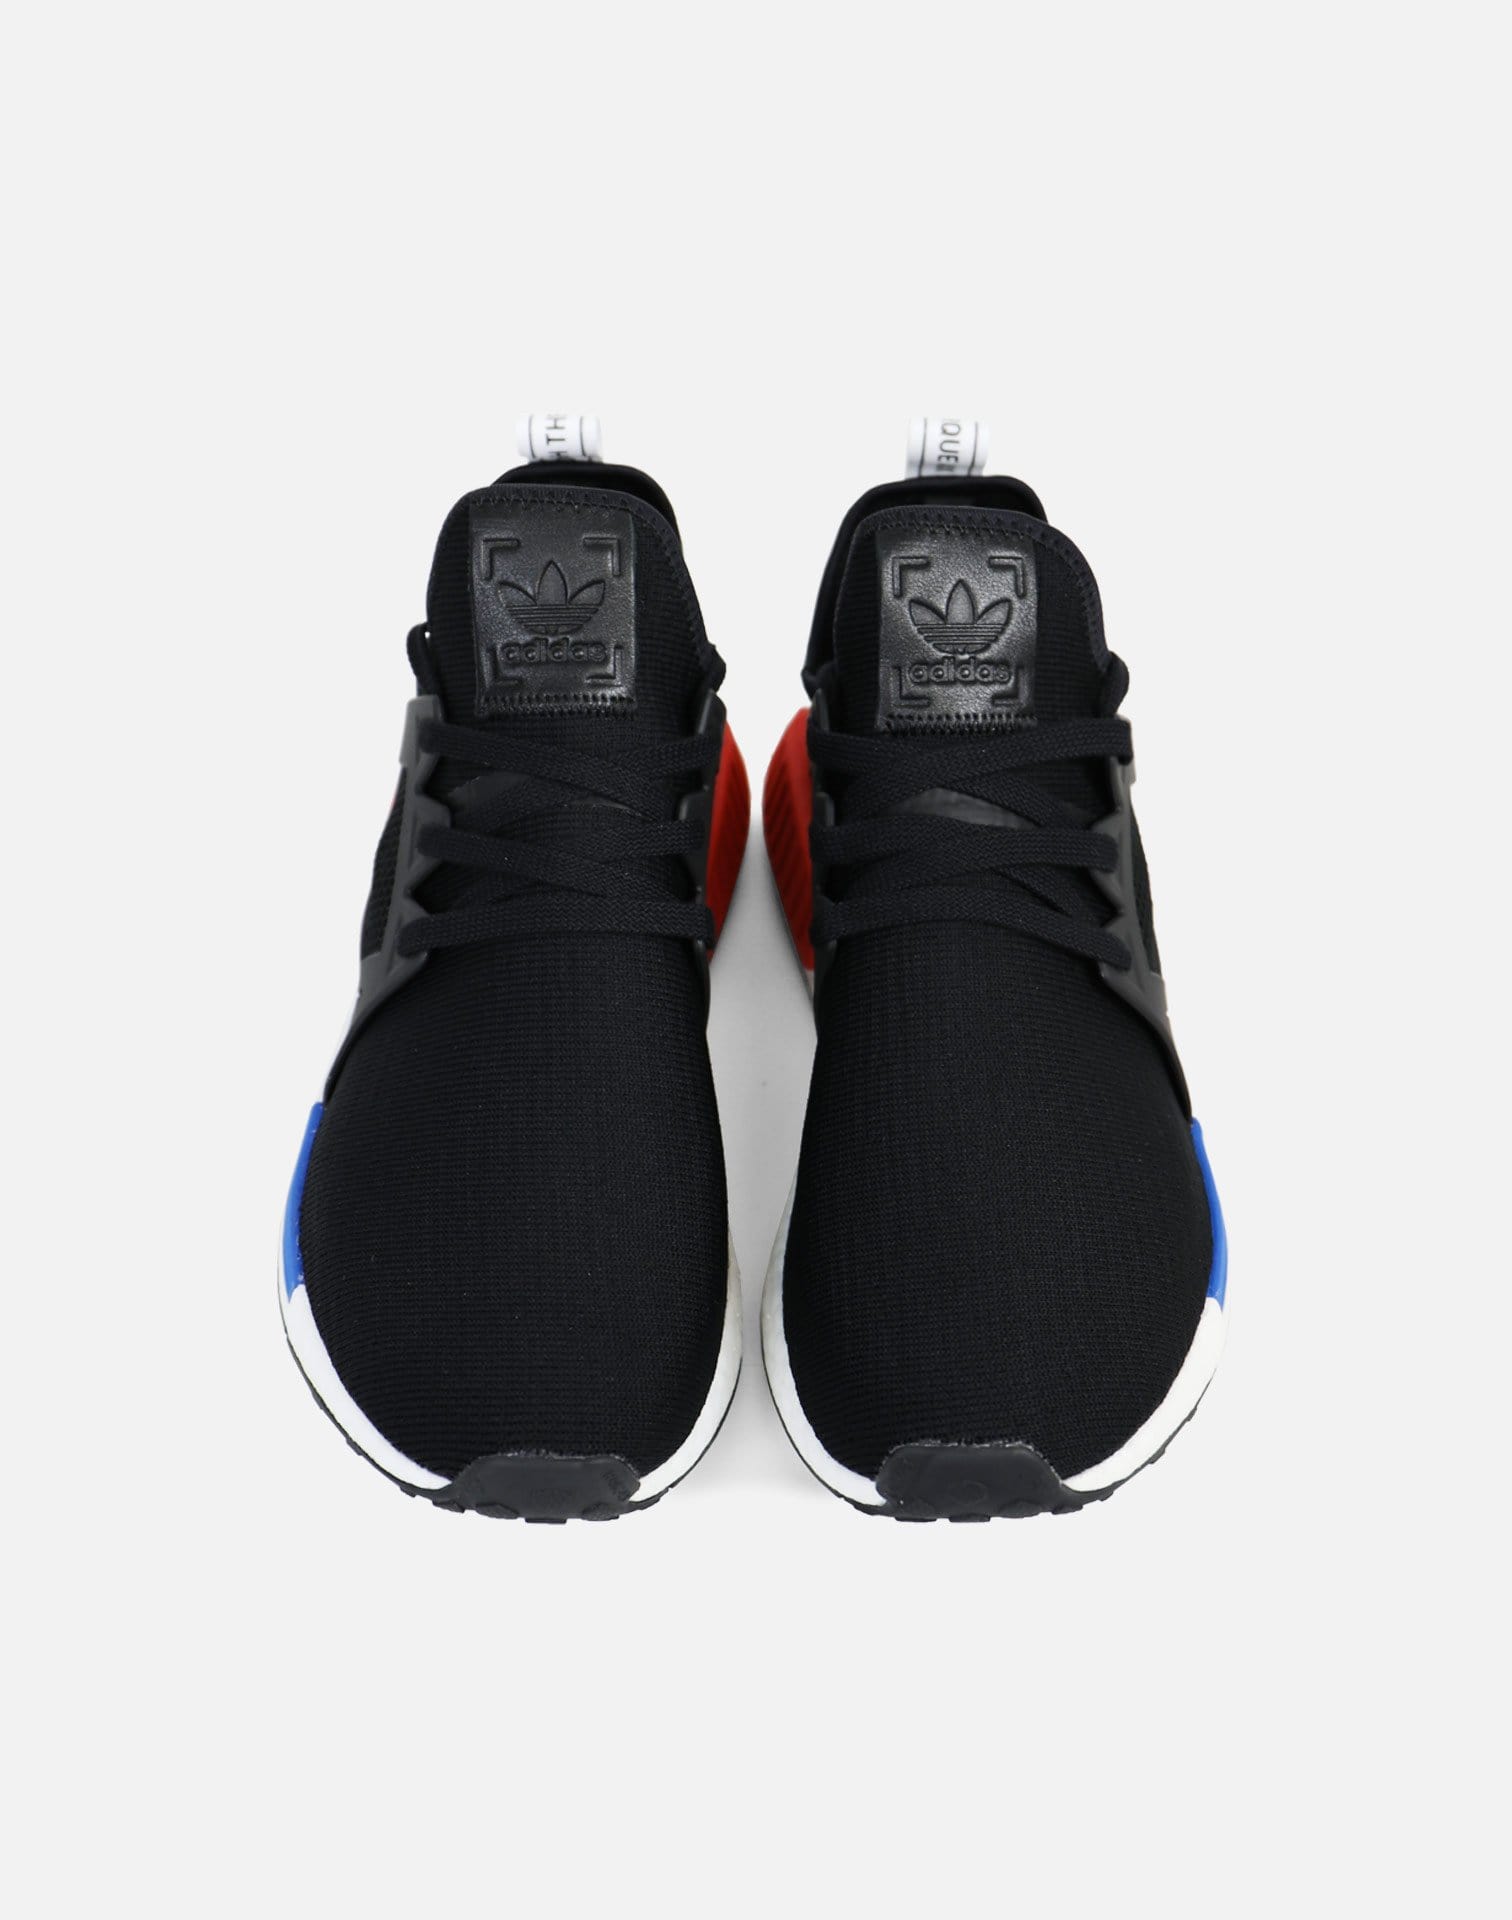 adidas NMD_XR1 (Core Black/Lush Red-Blue)